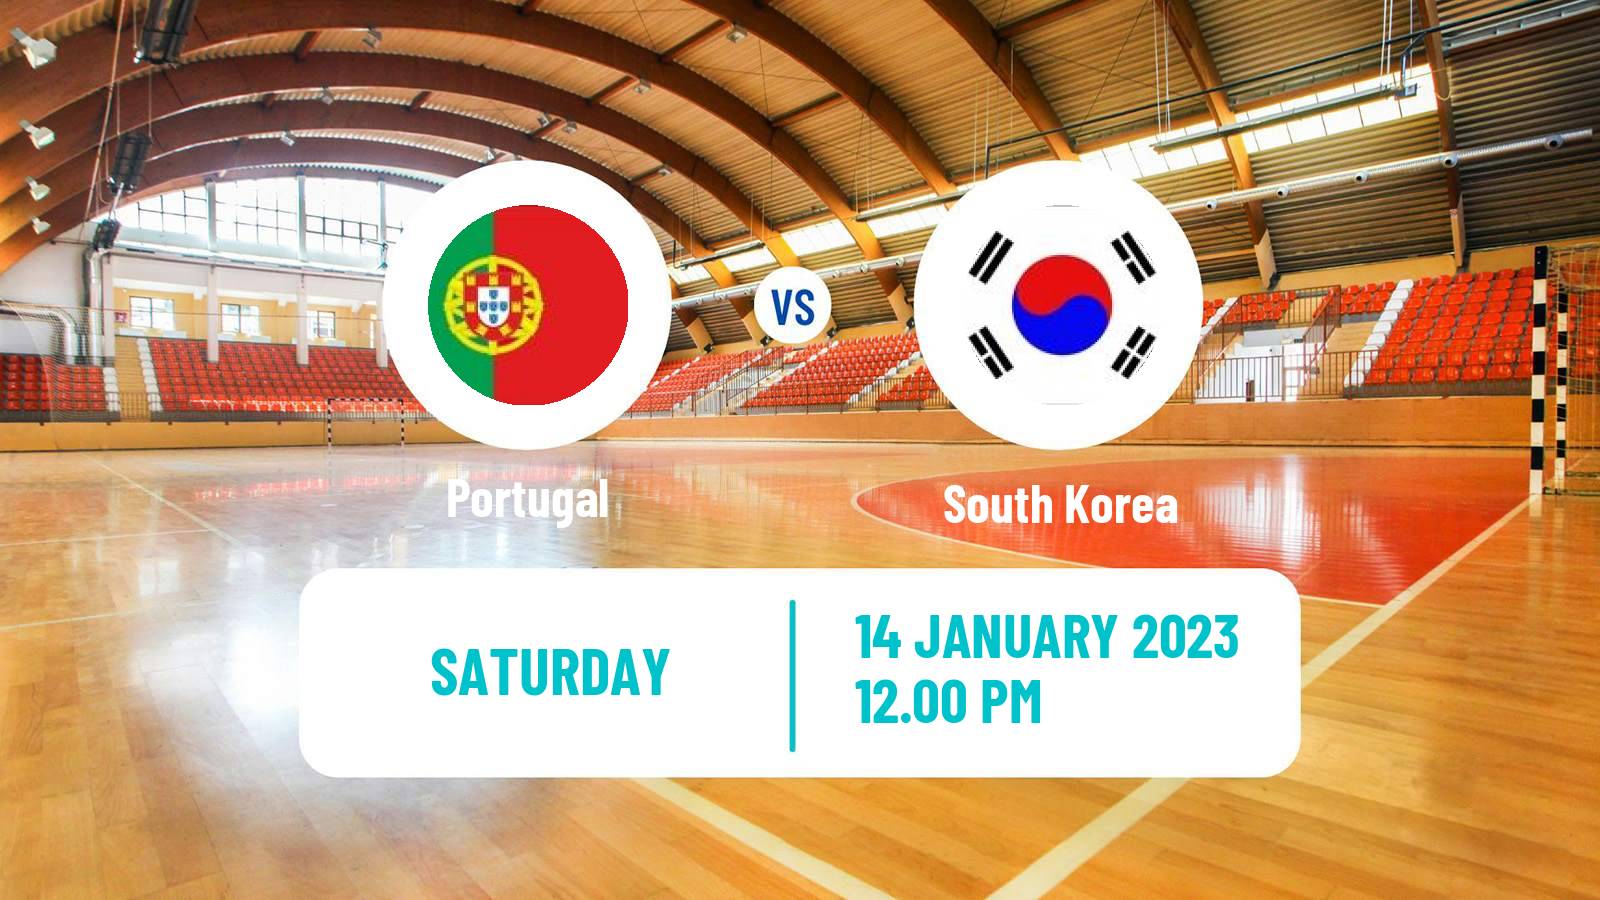 Handball Handball World Championship Portugal - South Korea